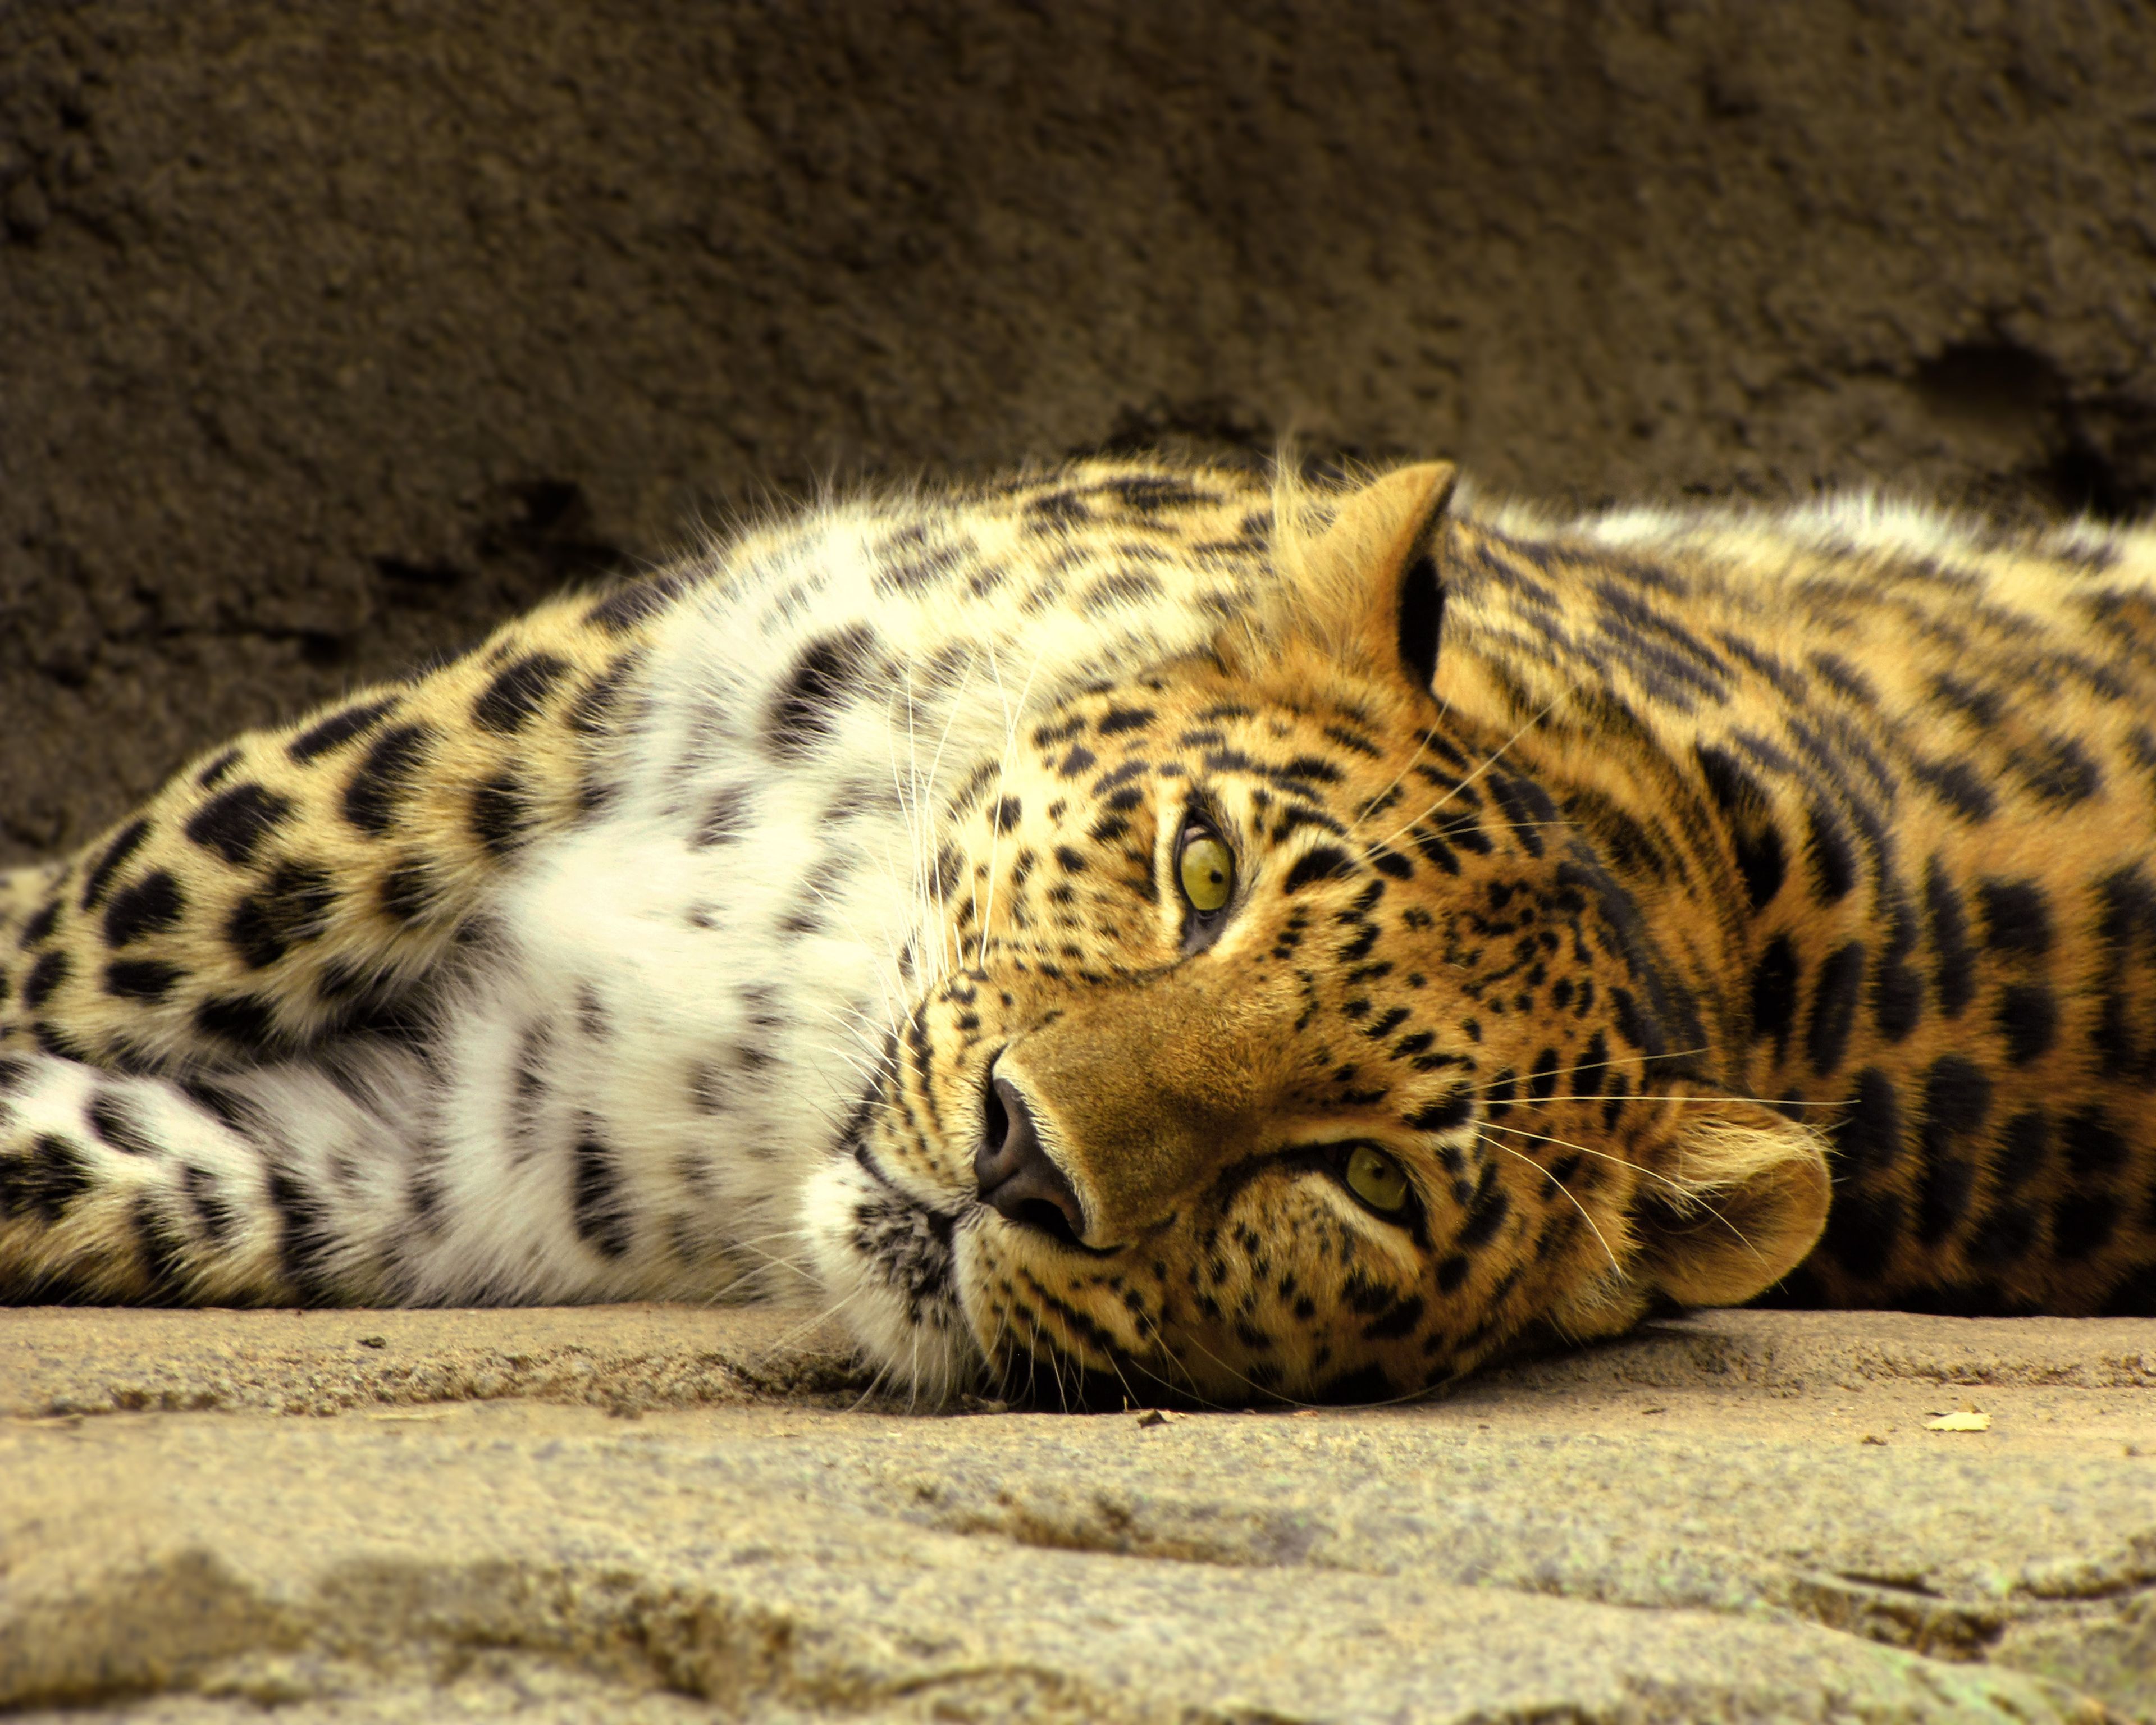 A portrait of a leopard lying on its side.